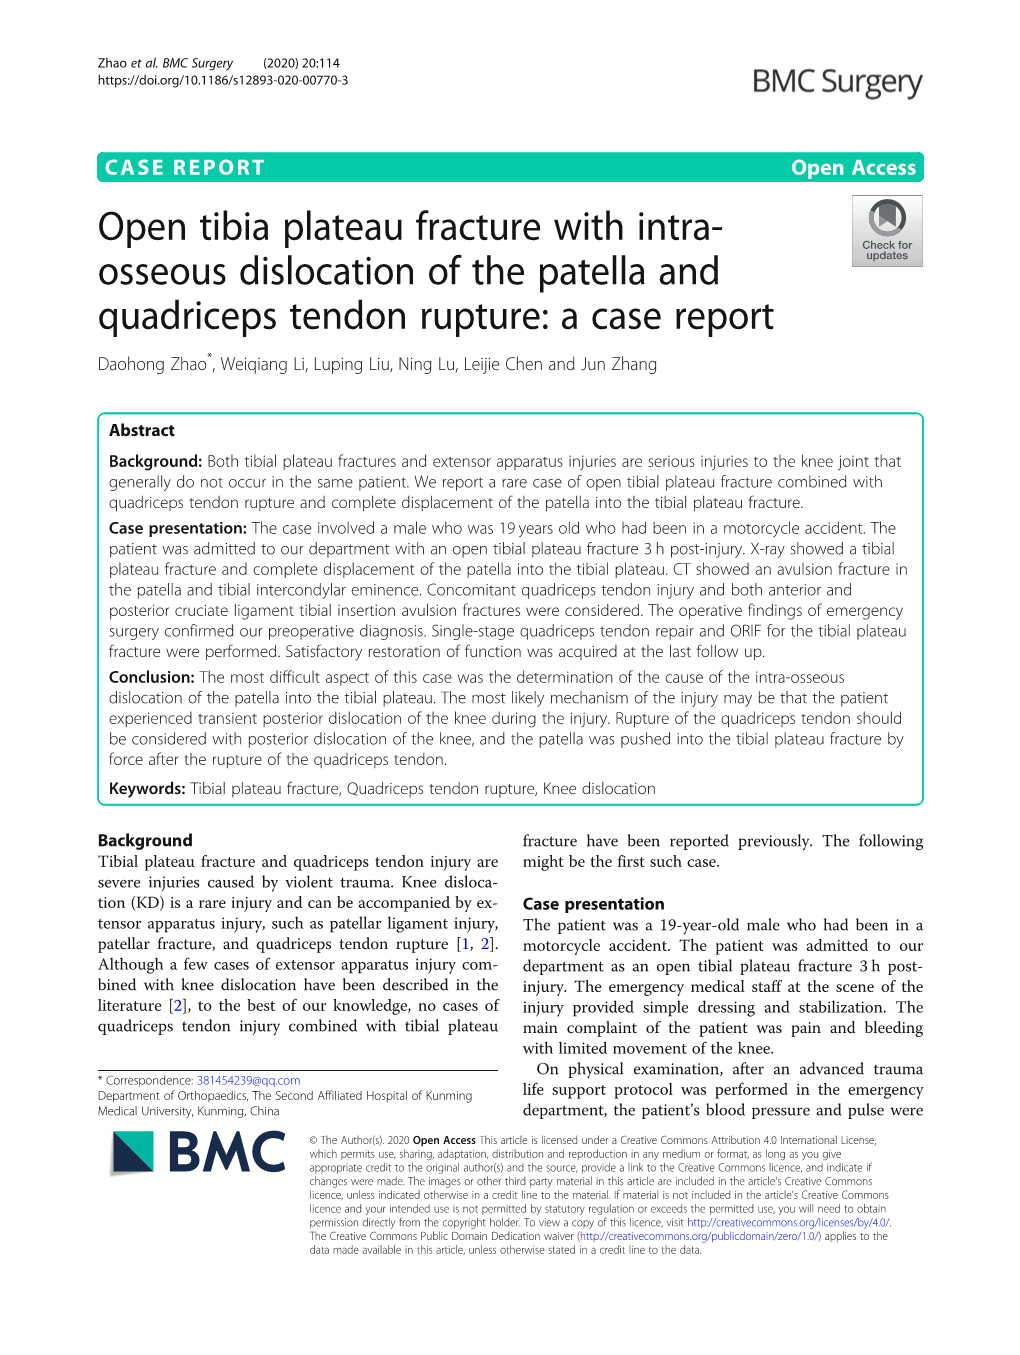 Osseous Dislocation of the Patella and Quadriceps Tendon Rupture: a Case Report Daohong Zhao*, Weiqiang Li, Luping Liu, Ning Lu, Leijie Chen and Jun Zhang